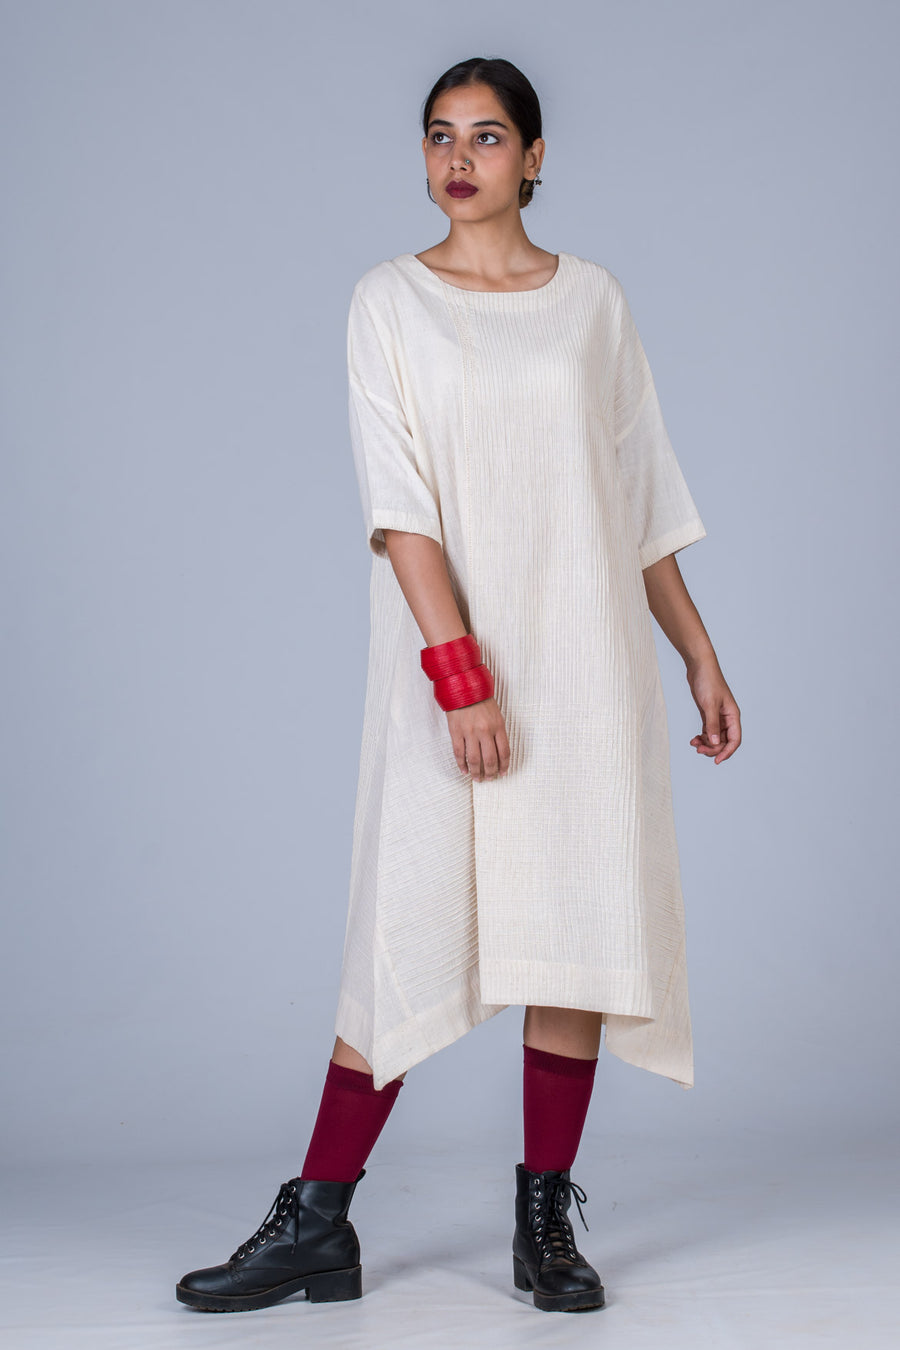 Off White Desi Cotton Dress - KARL - Upasana Design Studio